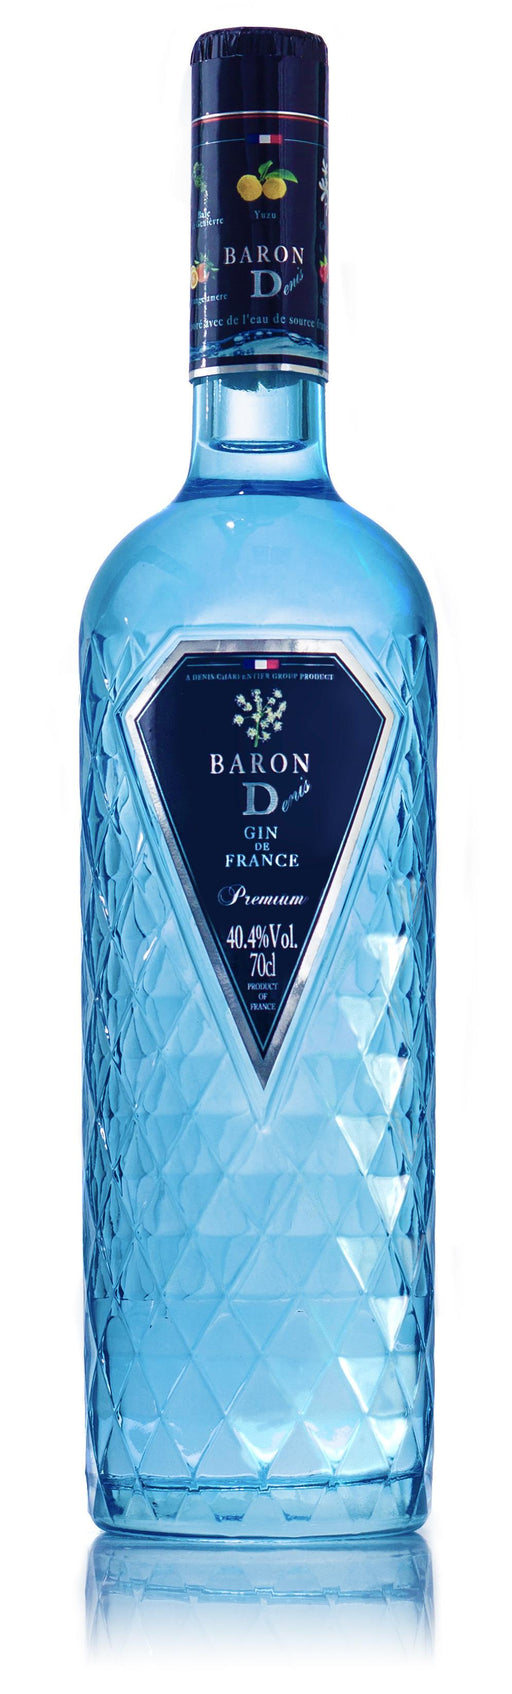 Baron D Gin 40,4% 70cl